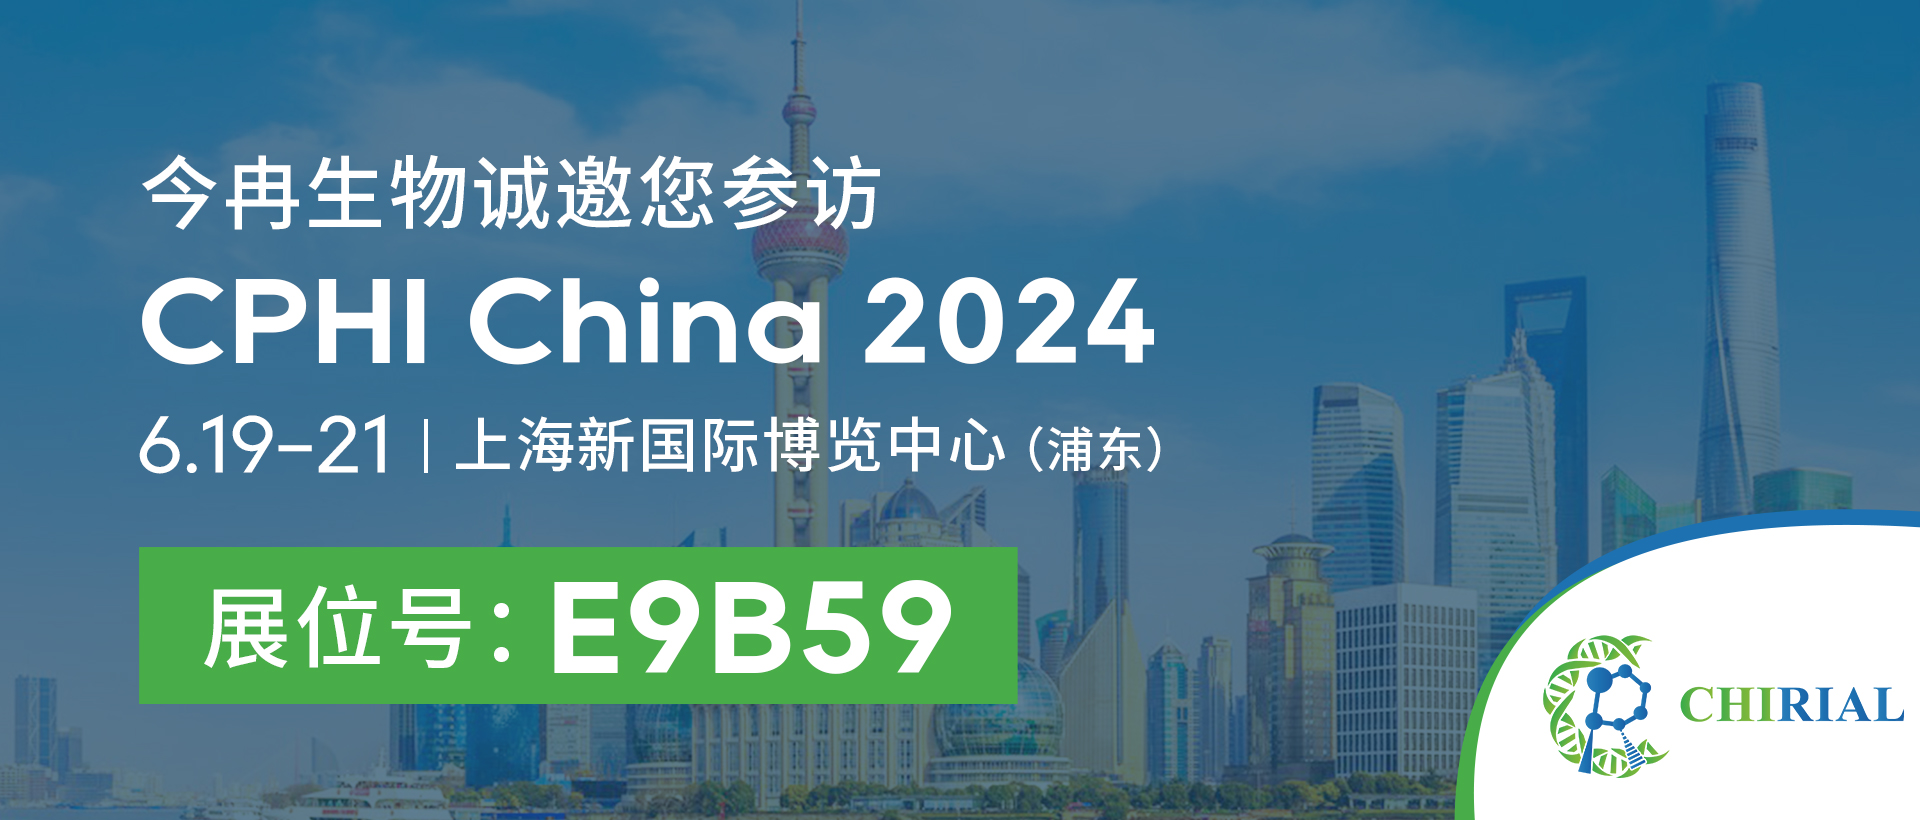 2024 CPHI展中国公式ウェブサイト招待ポスター